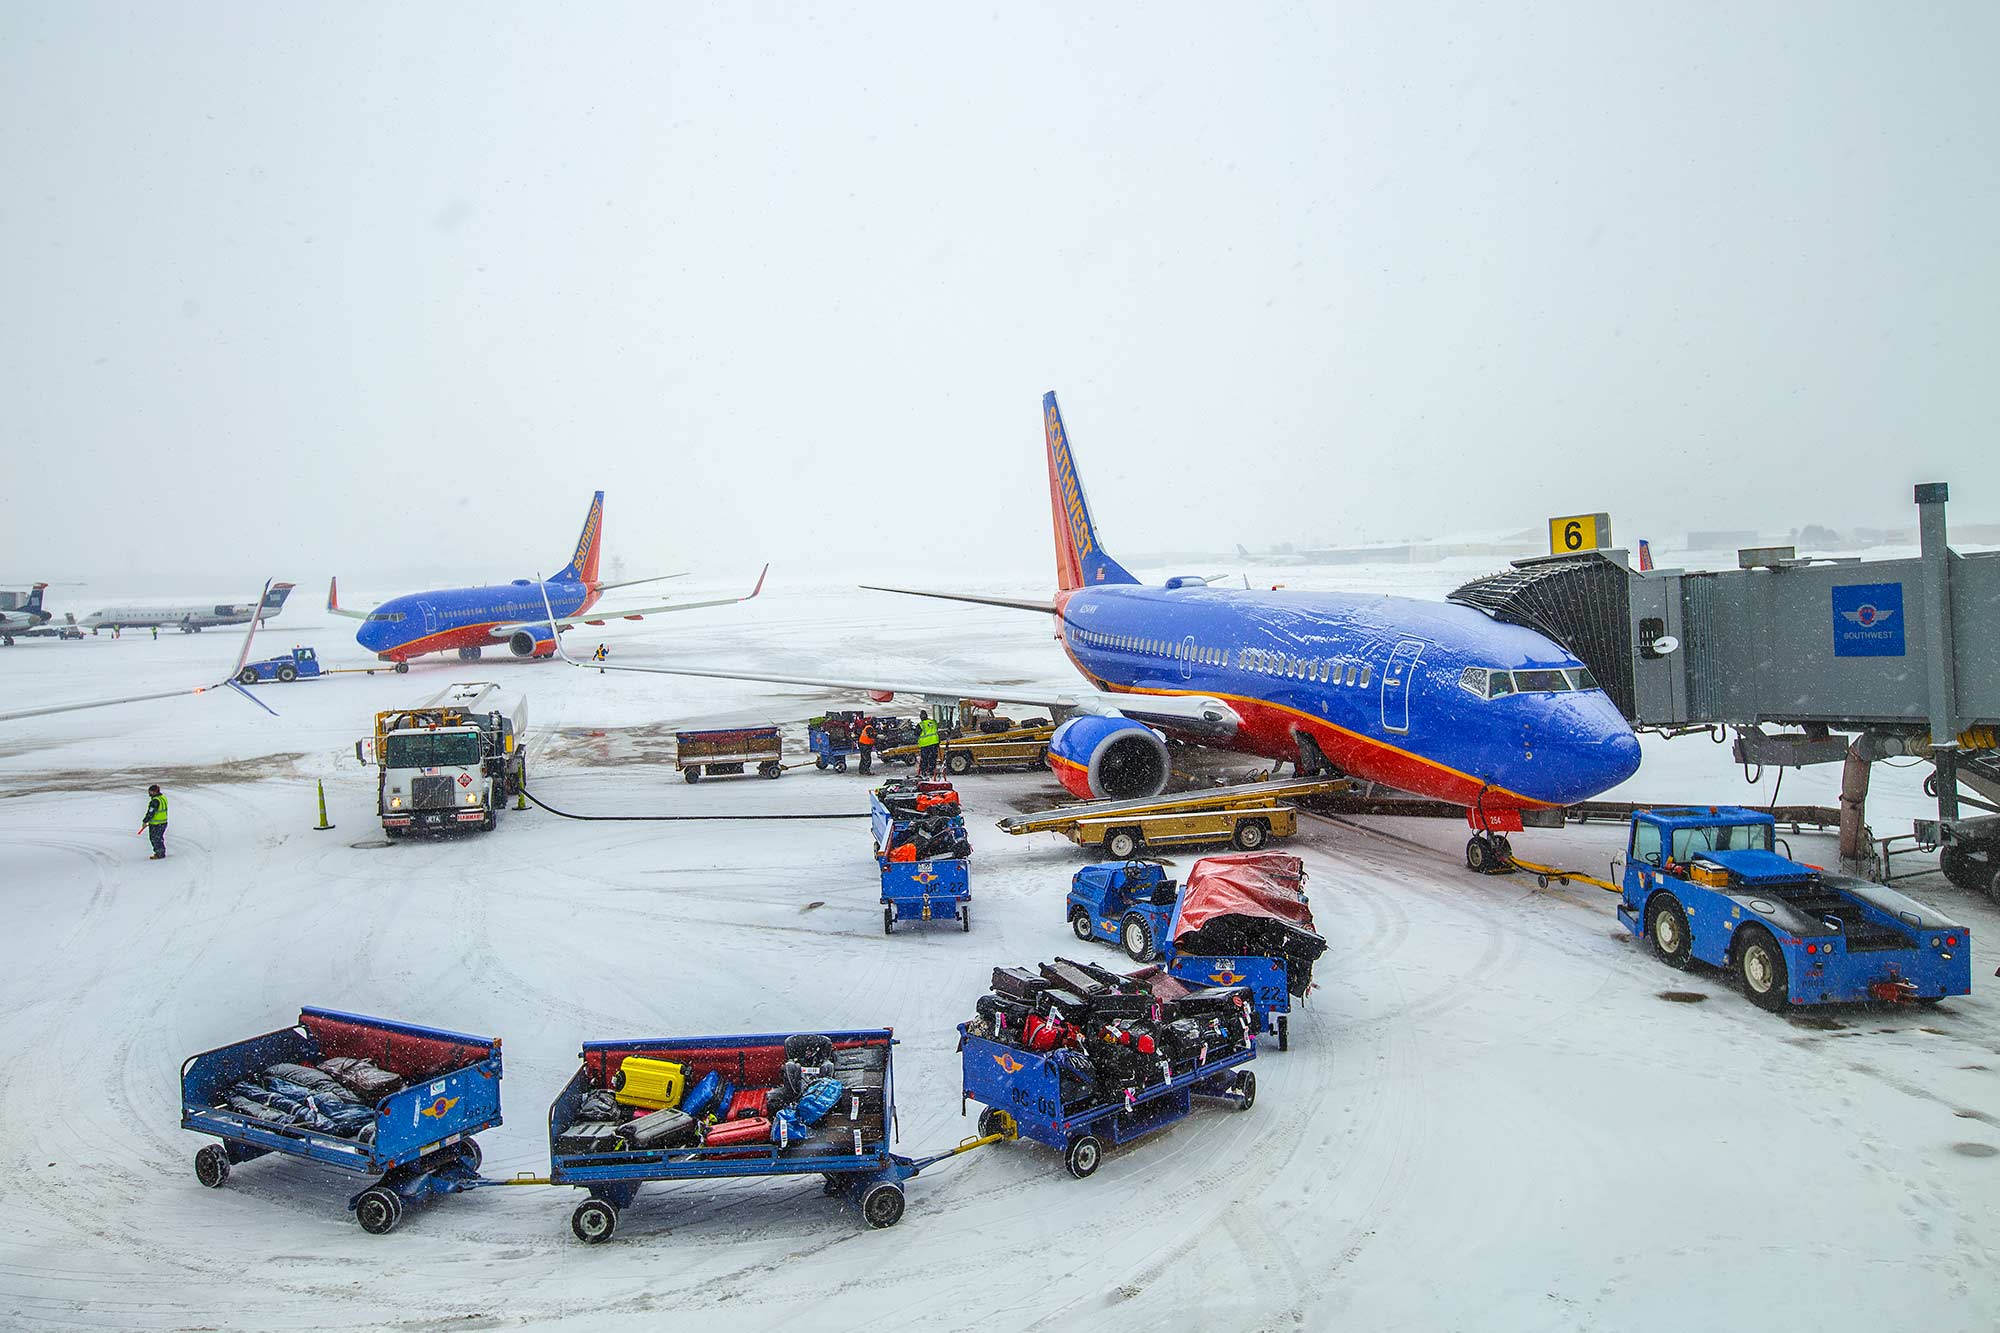 Snow at Bradley, Bradley International Airport, Windsor Locks, CT - 2/14/15